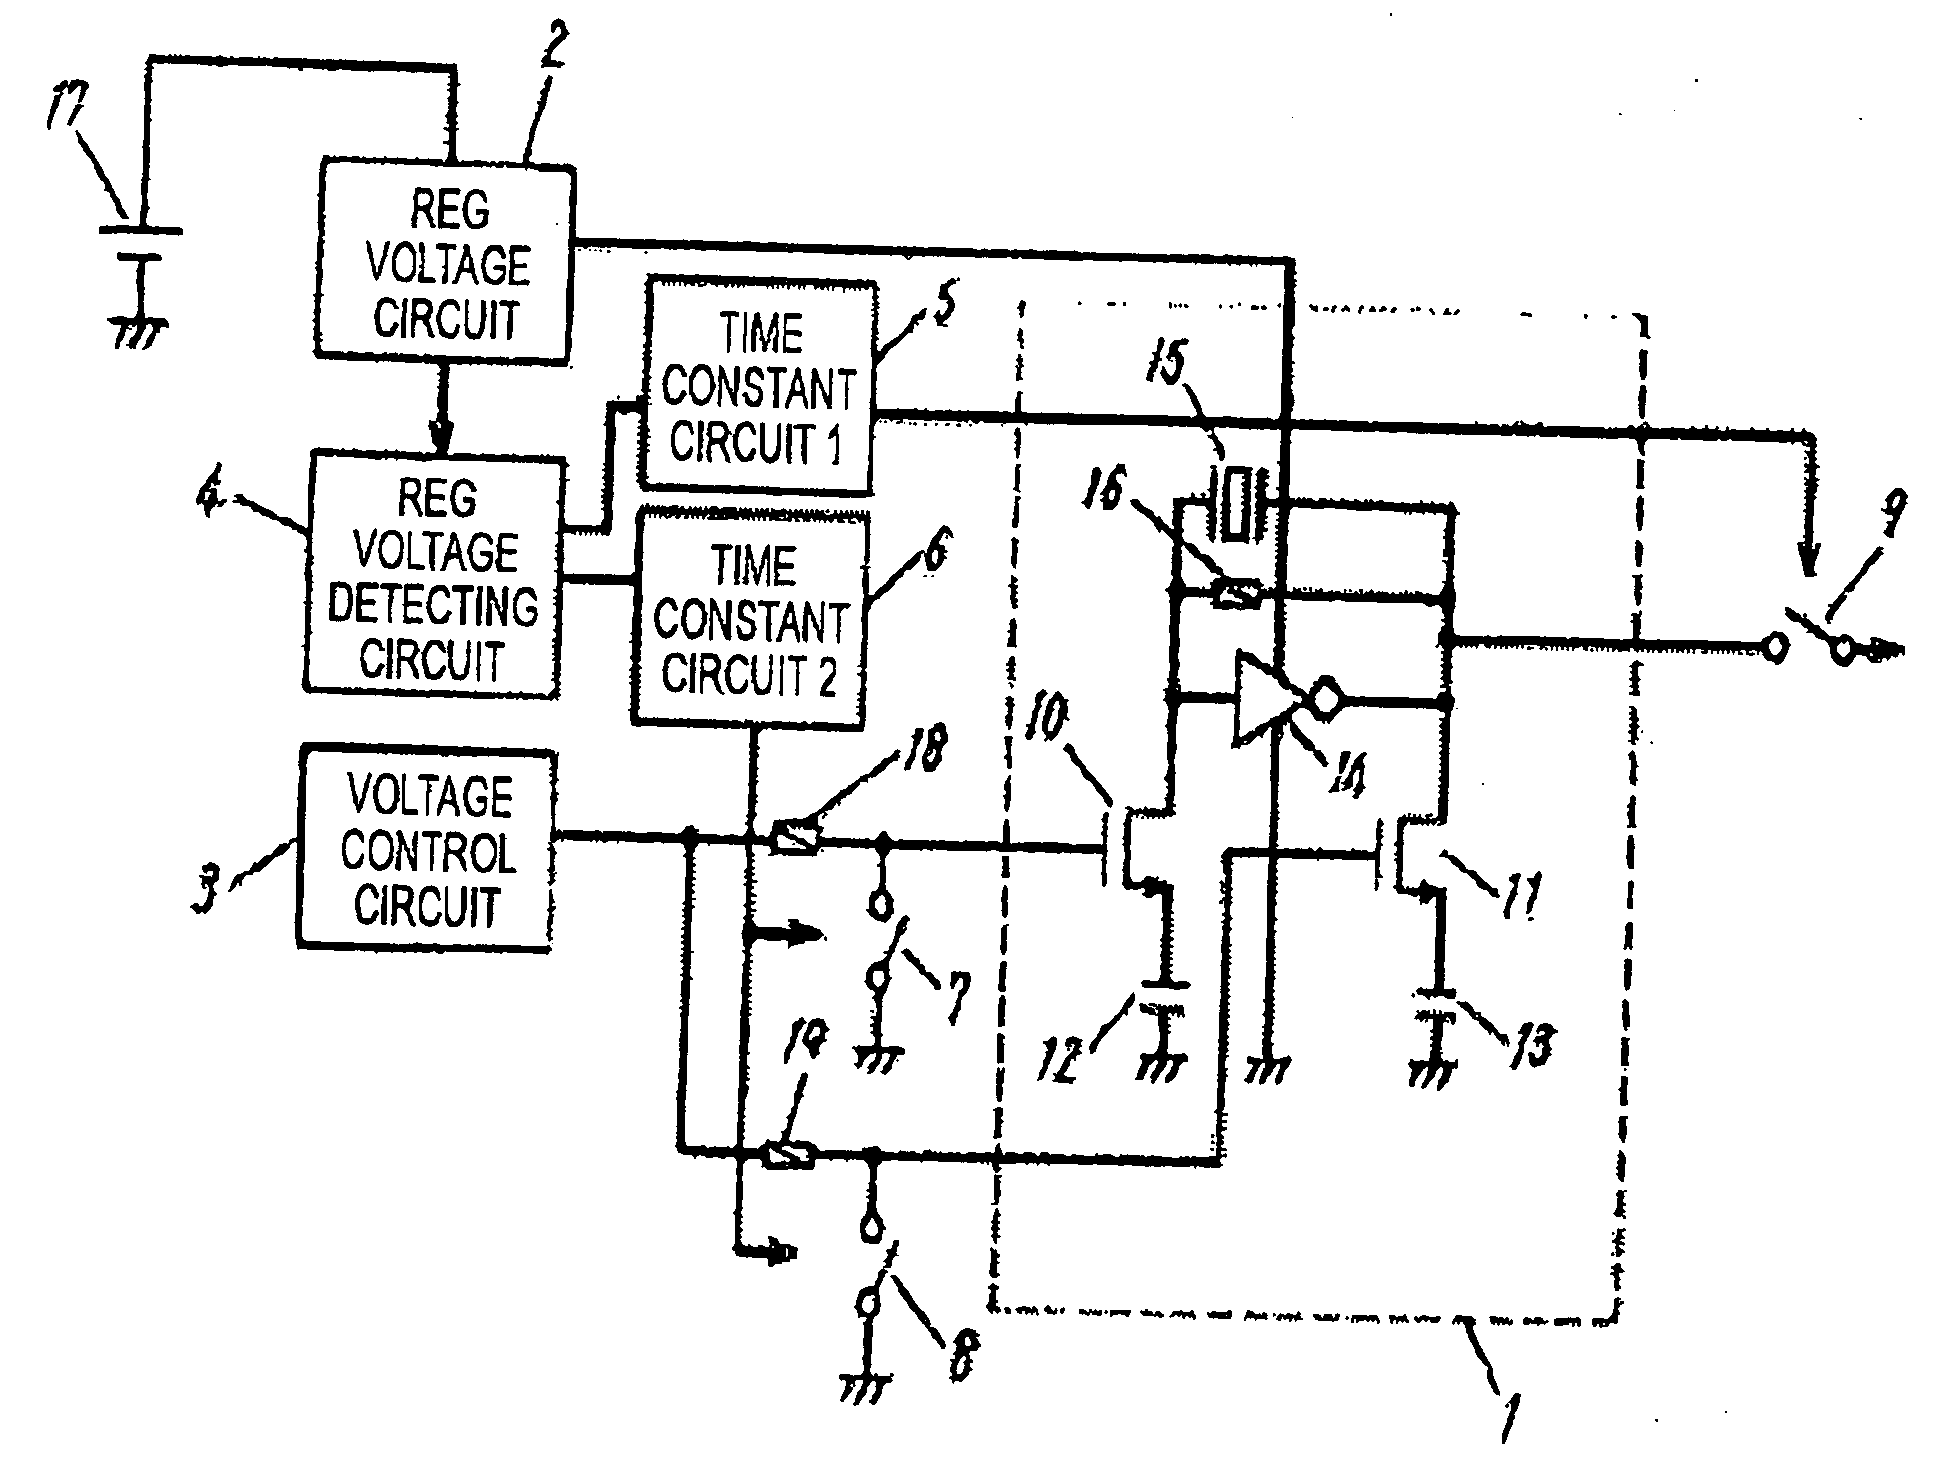 Oscillator starting control circuit